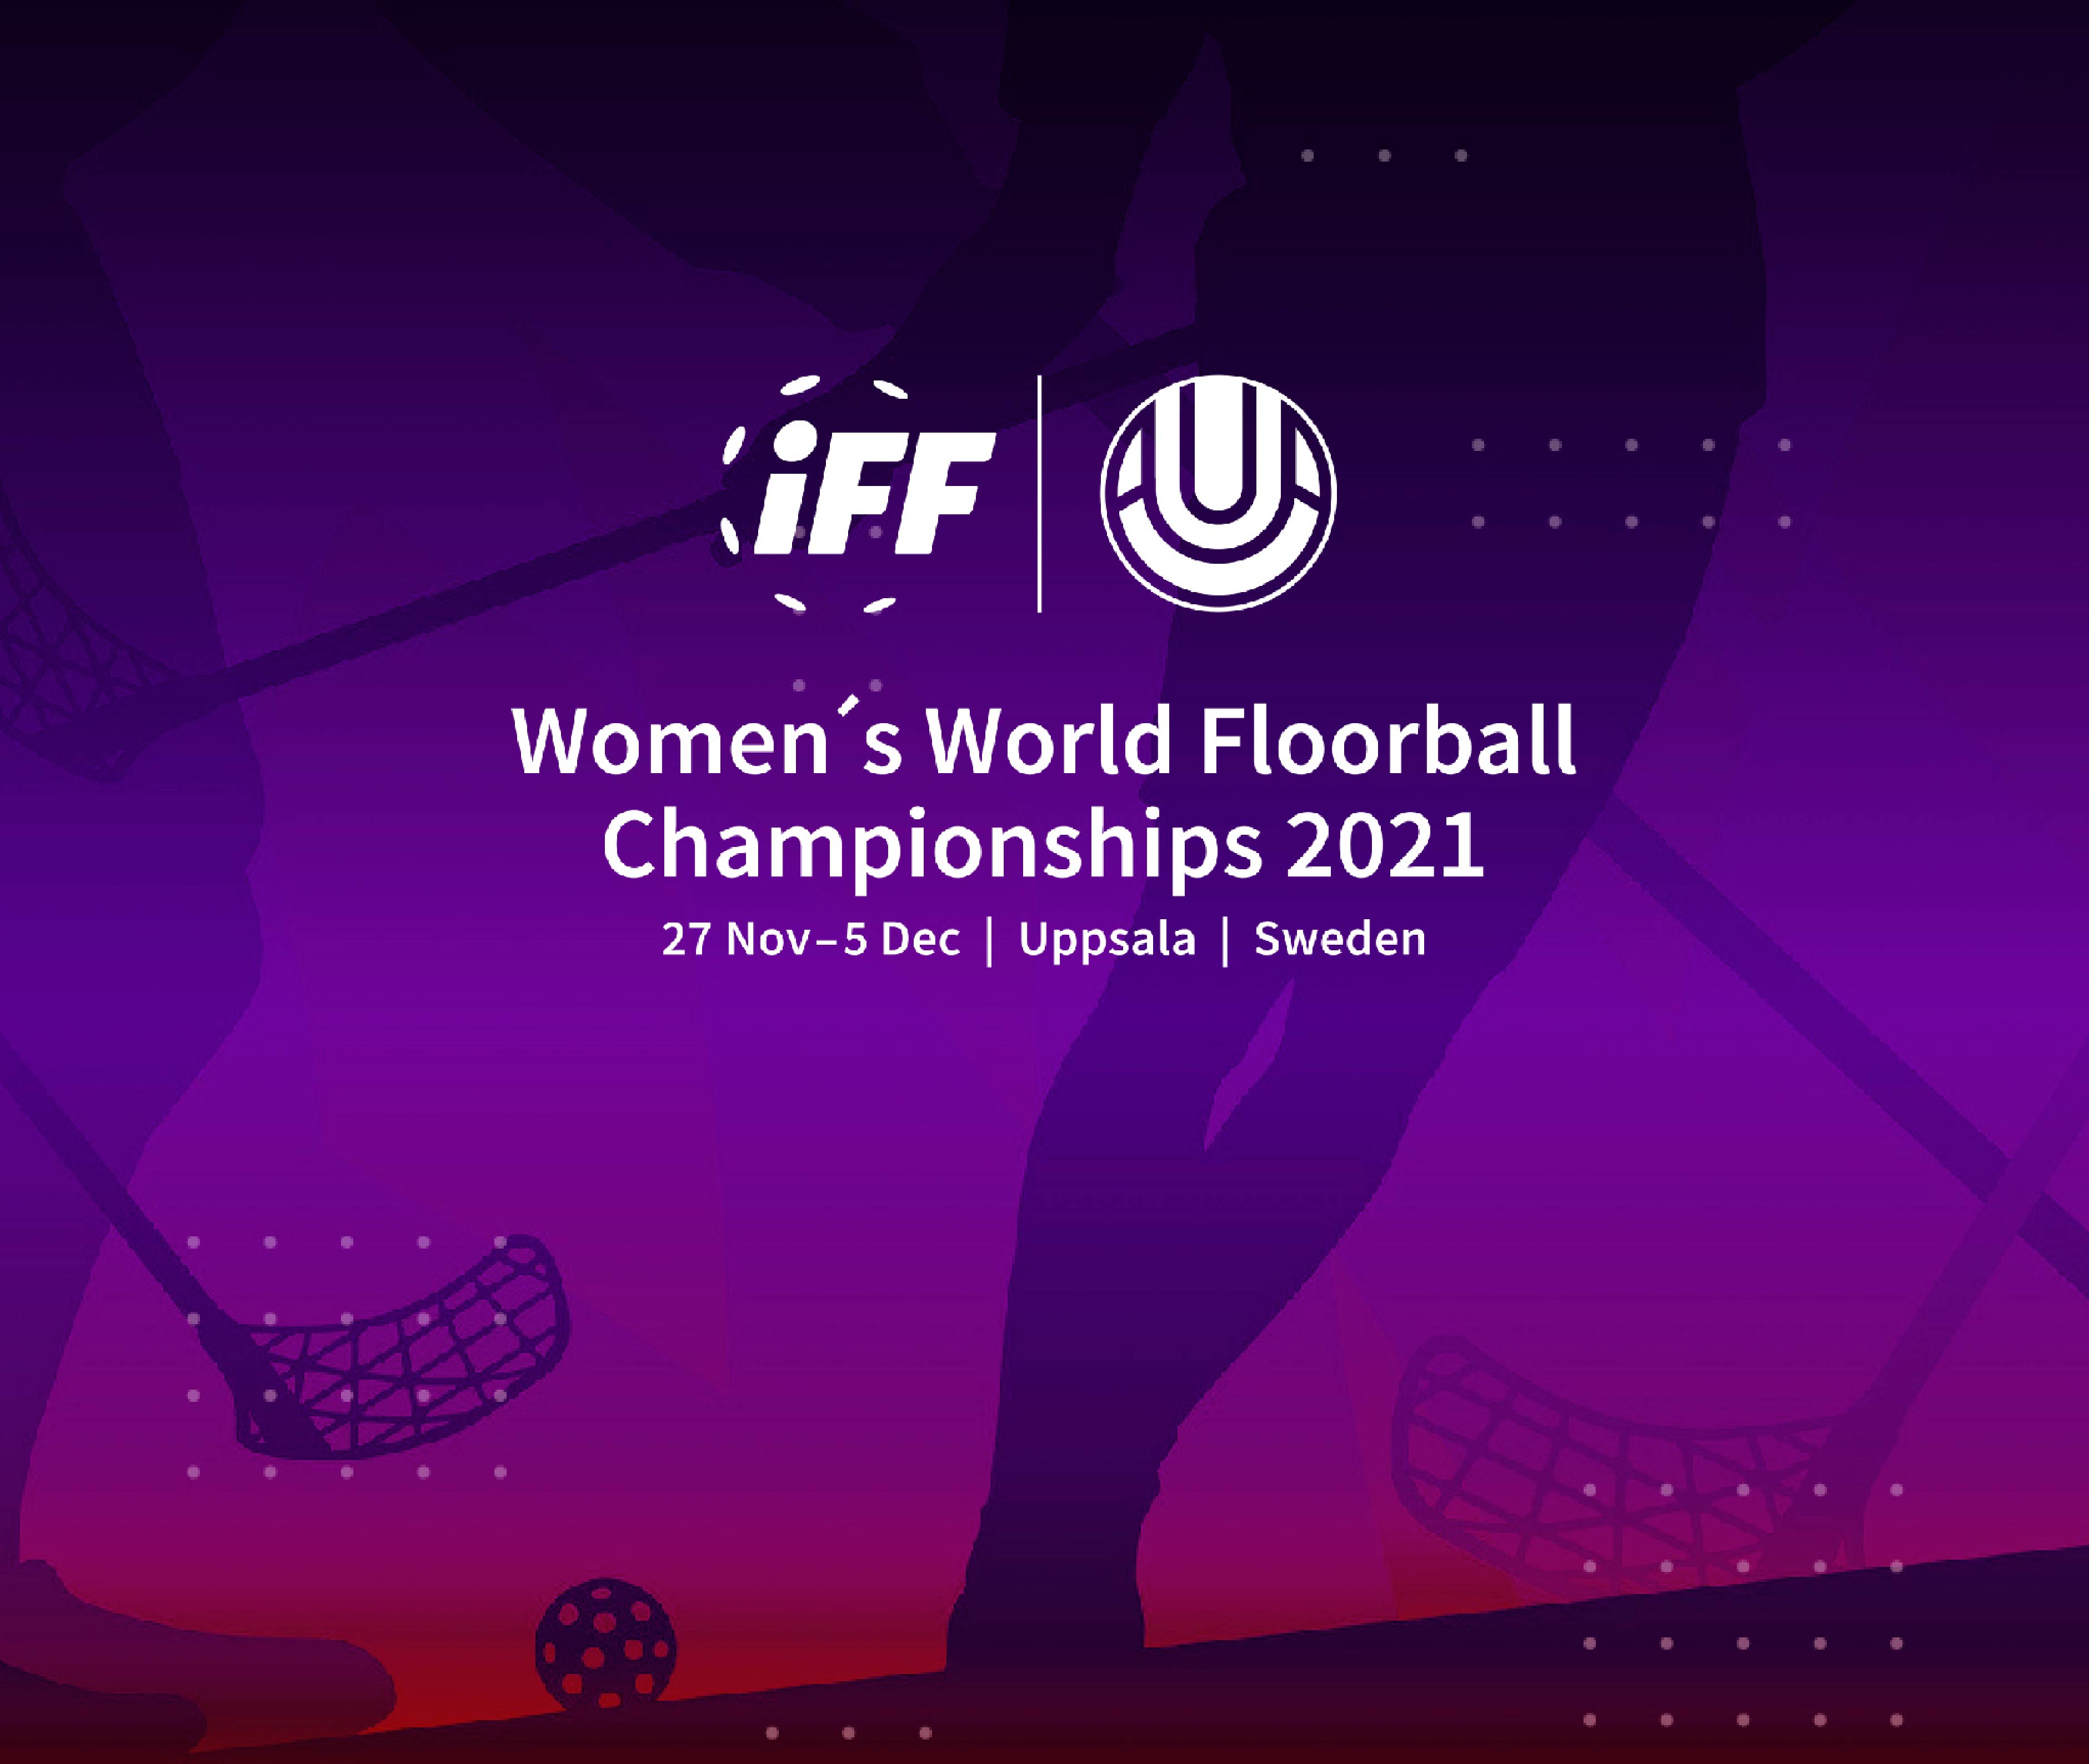  Women's World Floorball Championships 2021